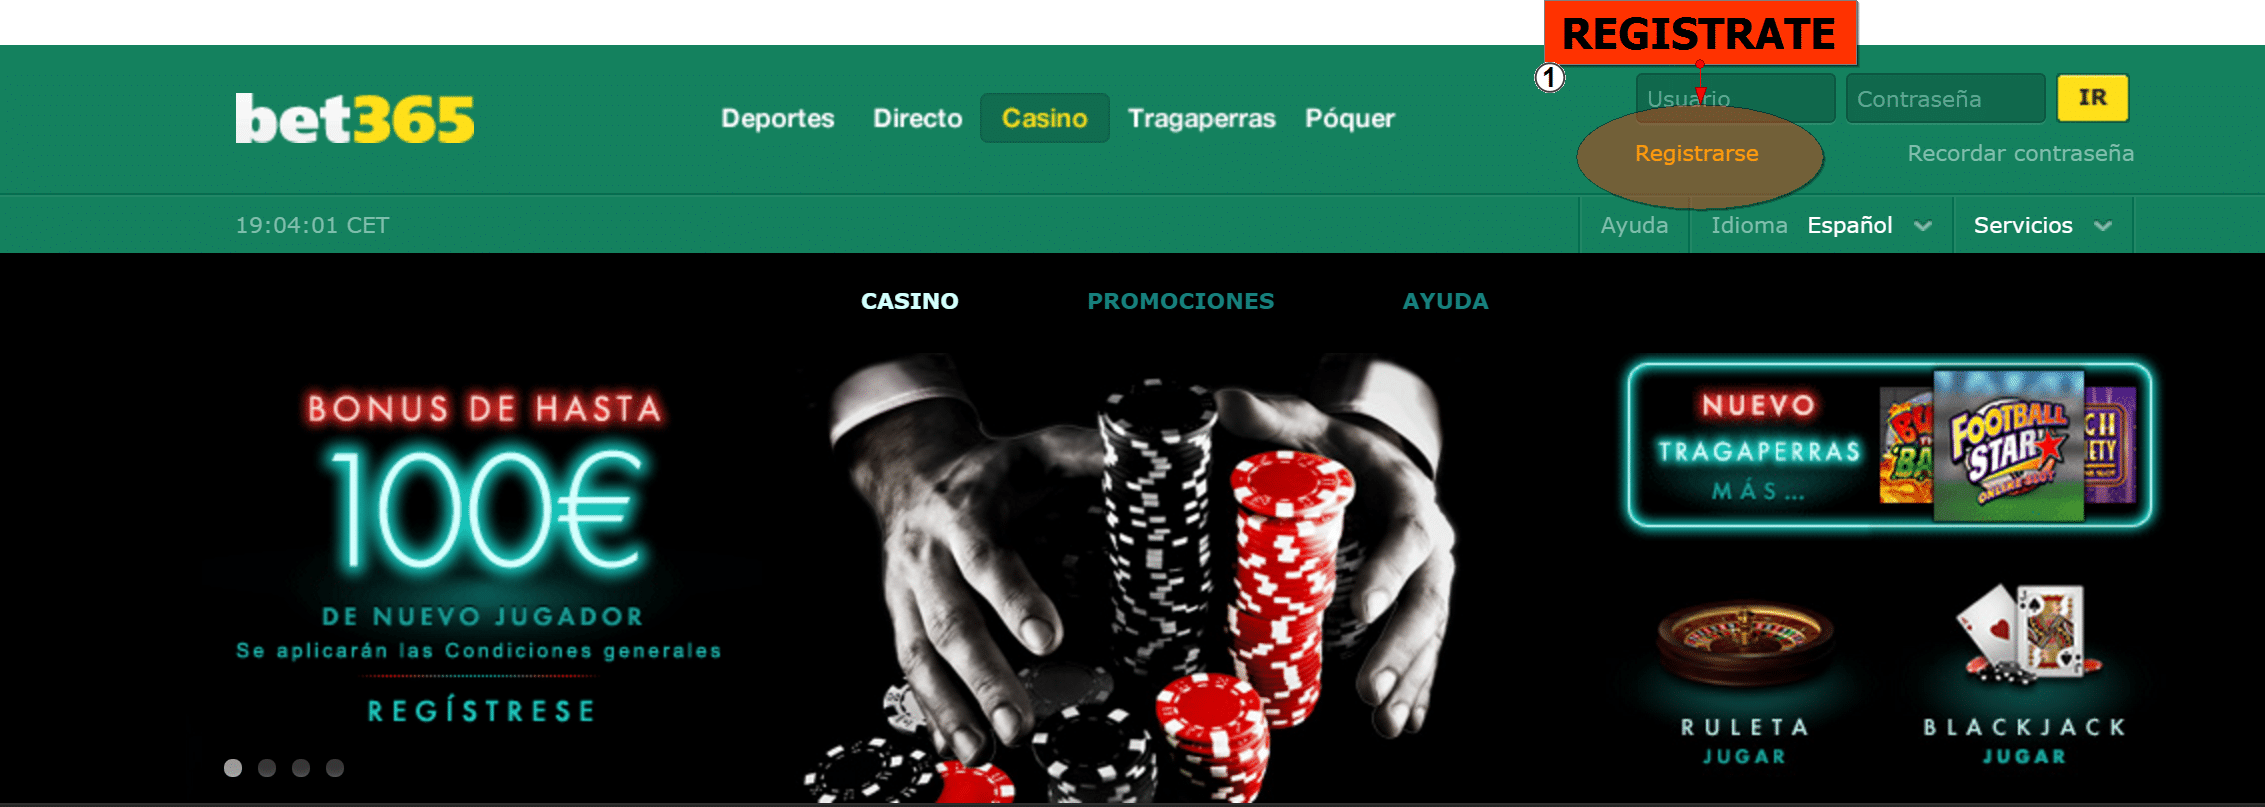 Bet365 casino ruleta Americana bonos - 30403